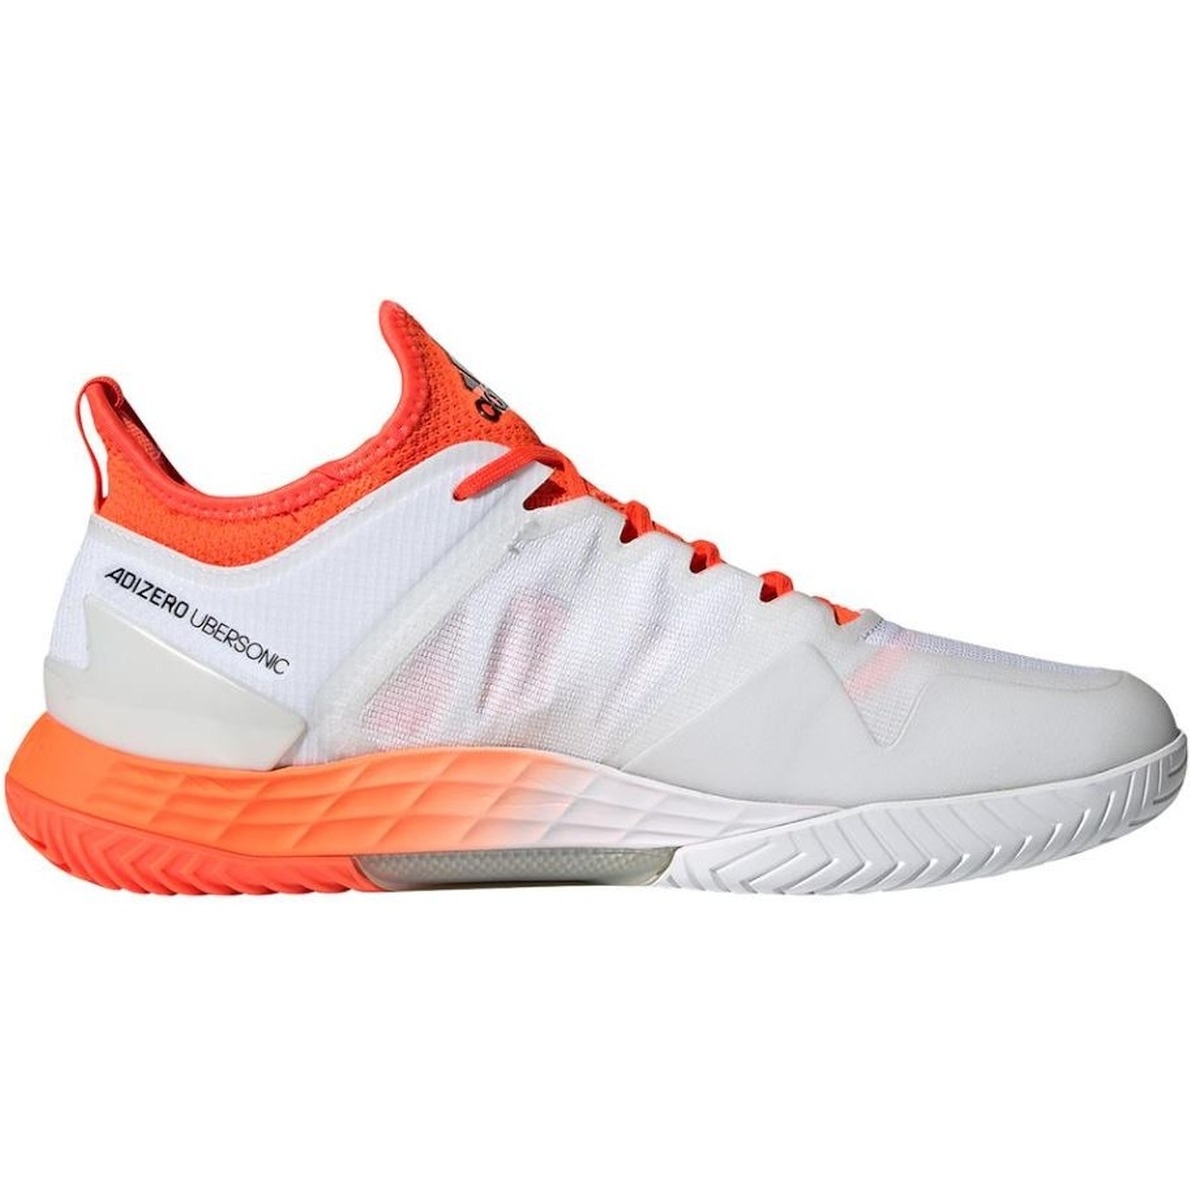 Adidas Men's adizero Ubersonic 4 Tennis Shoes (White/Silver Metallic ...